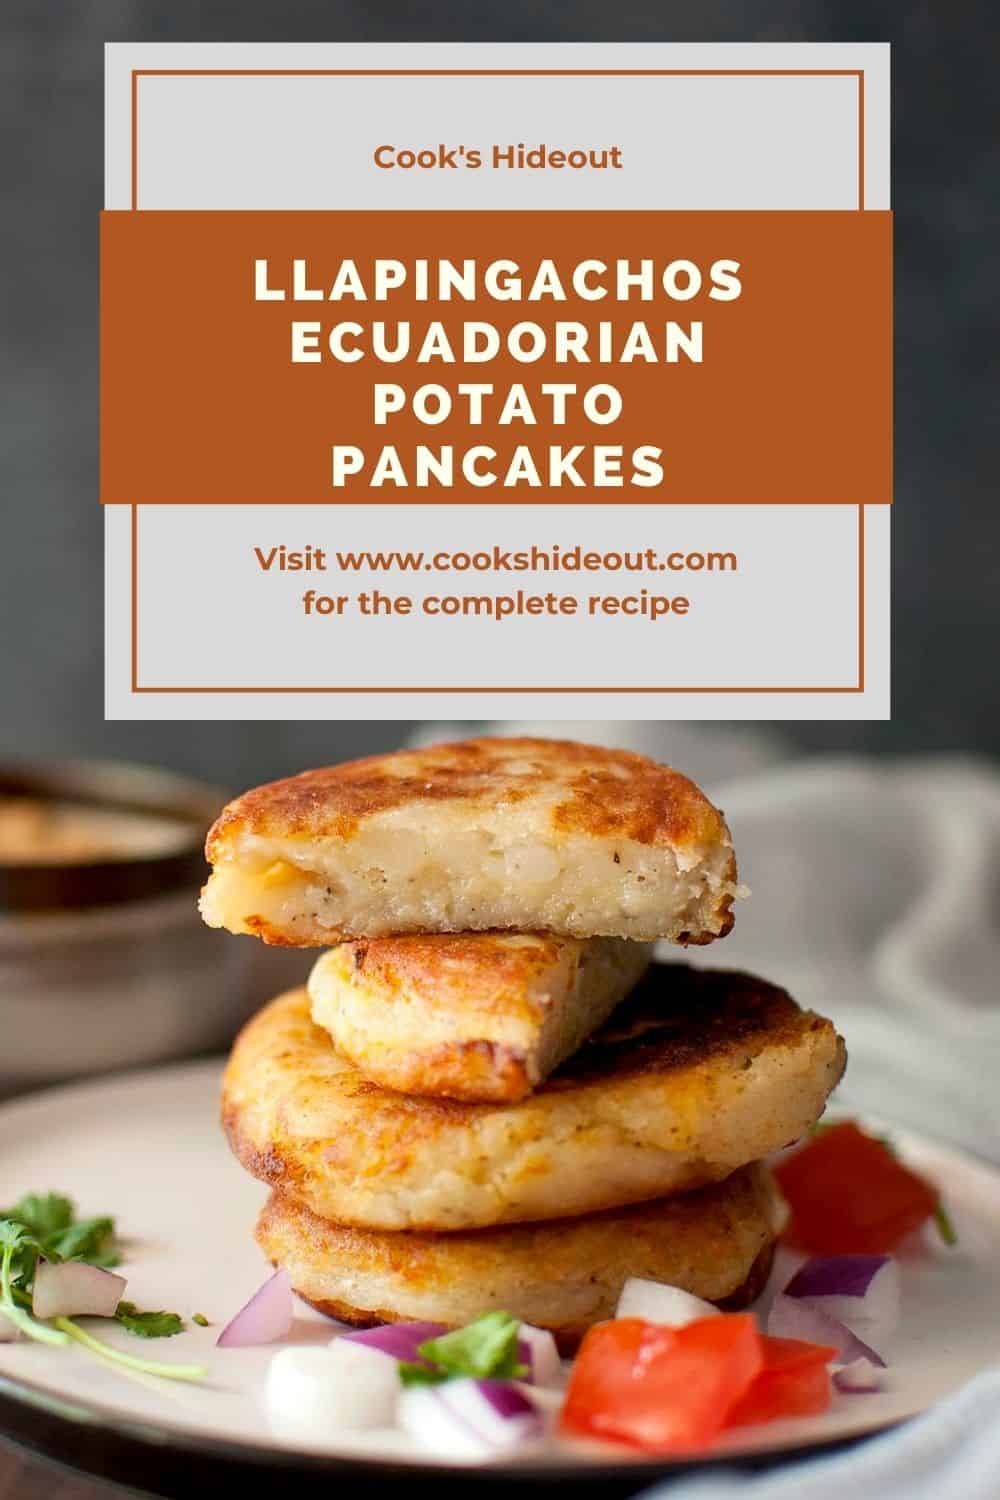 Stack of Ecuadorian potato pancakes